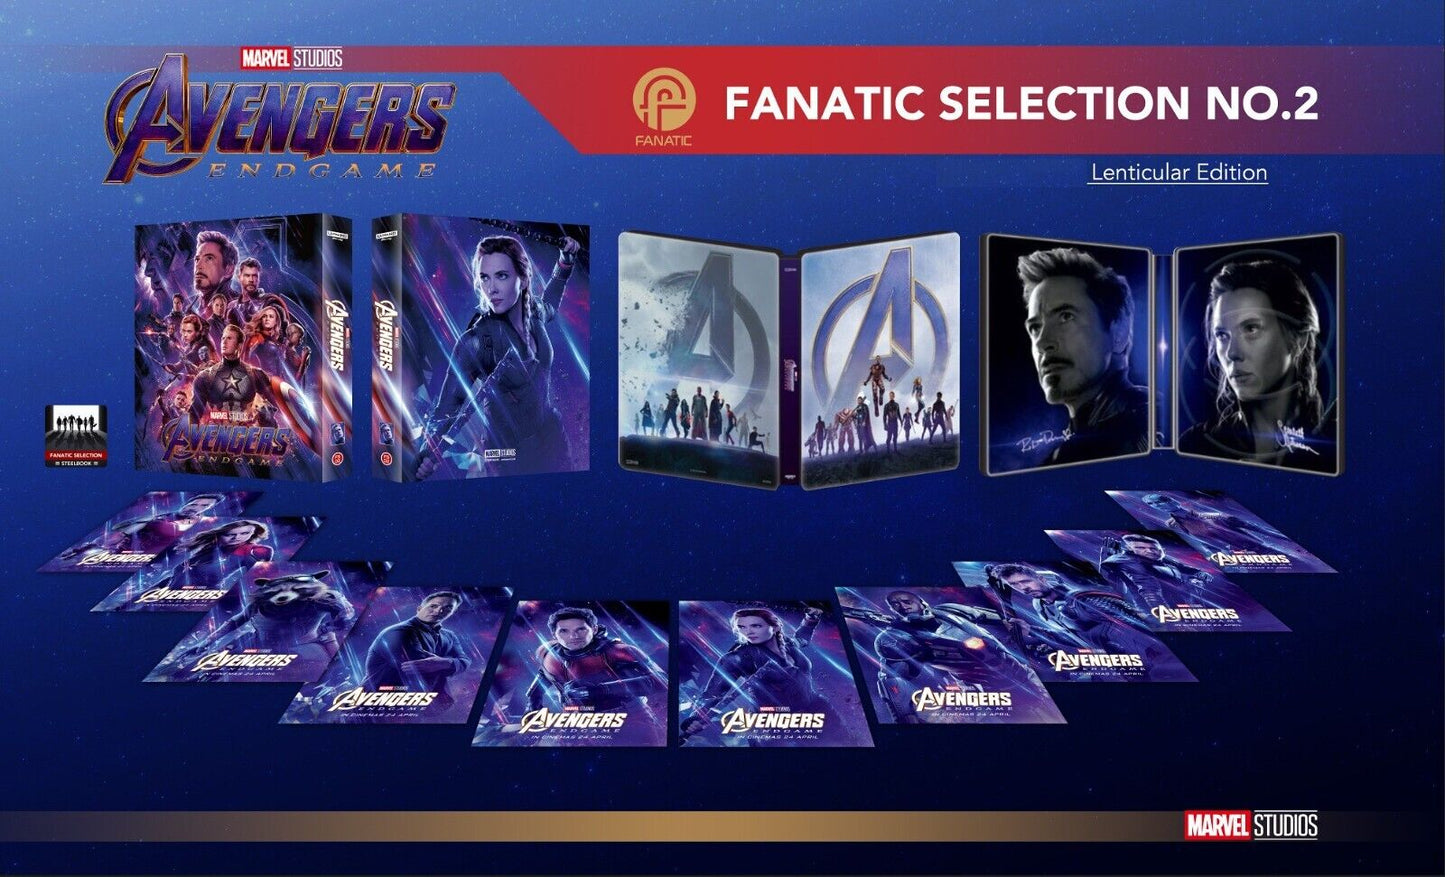 Avengers: Endgame 4K Blu-ray SteelBook Fanatic Selection No.2